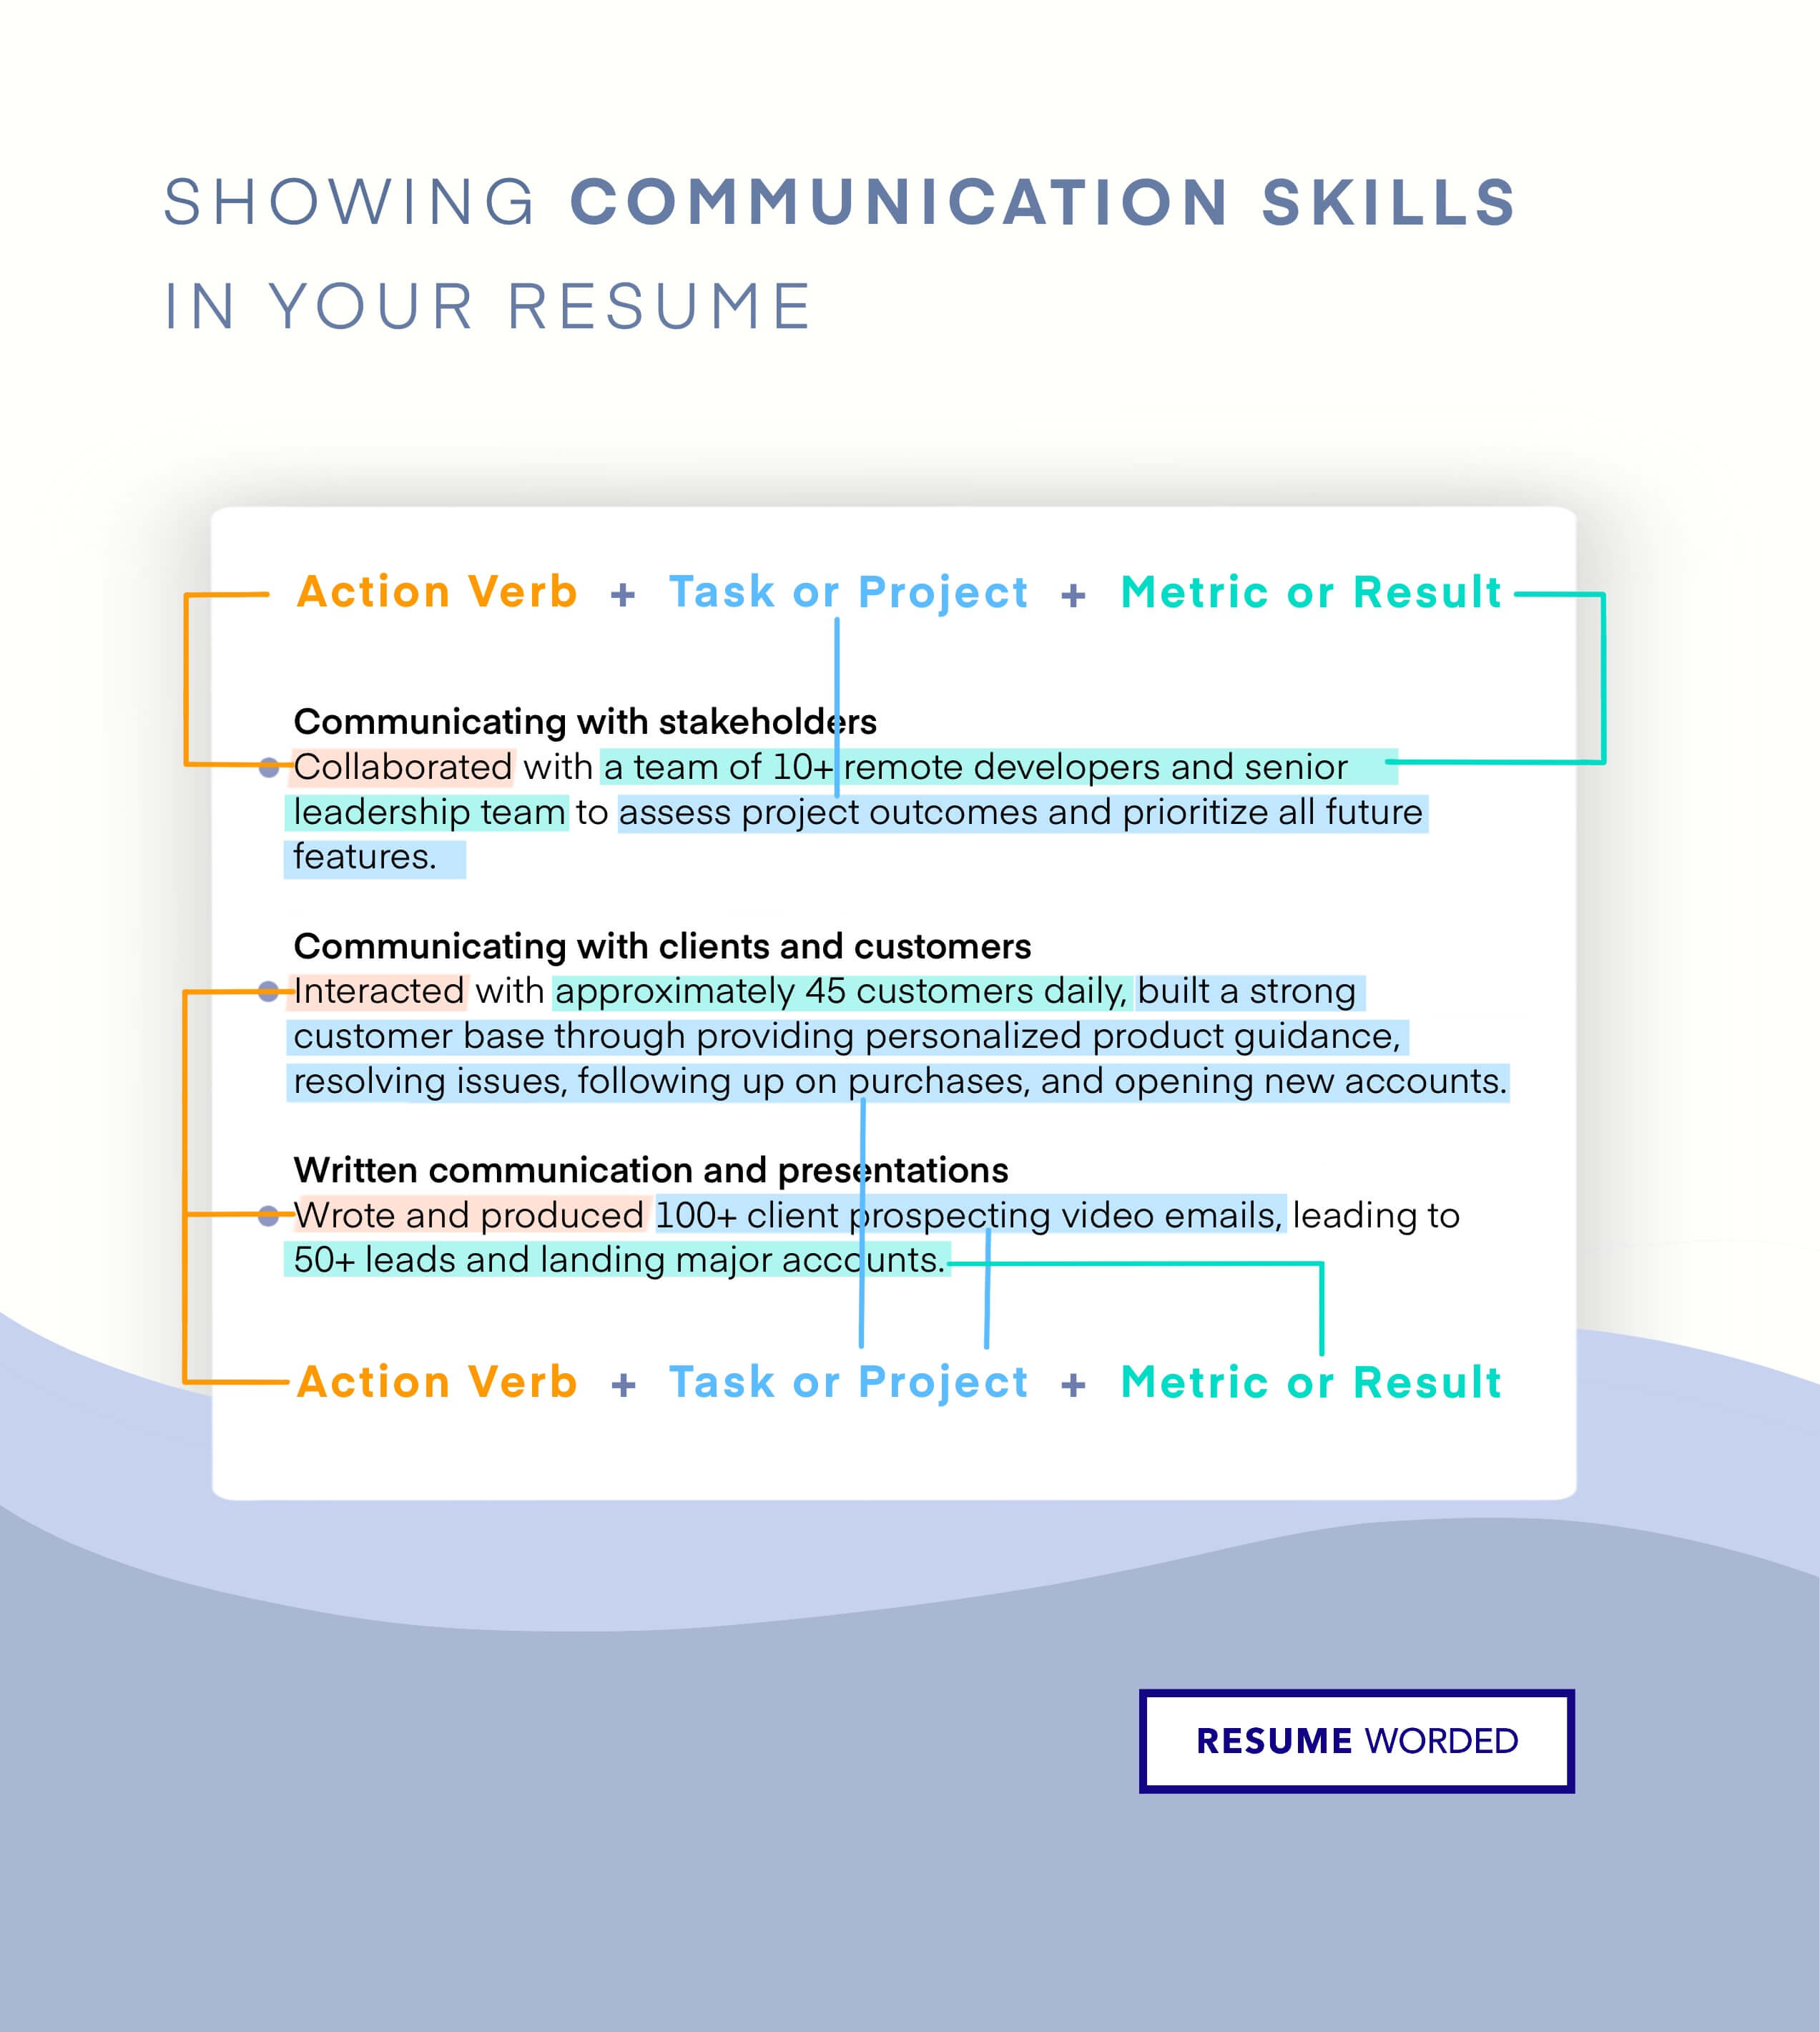 Showcase your communication skills - Auditor CV